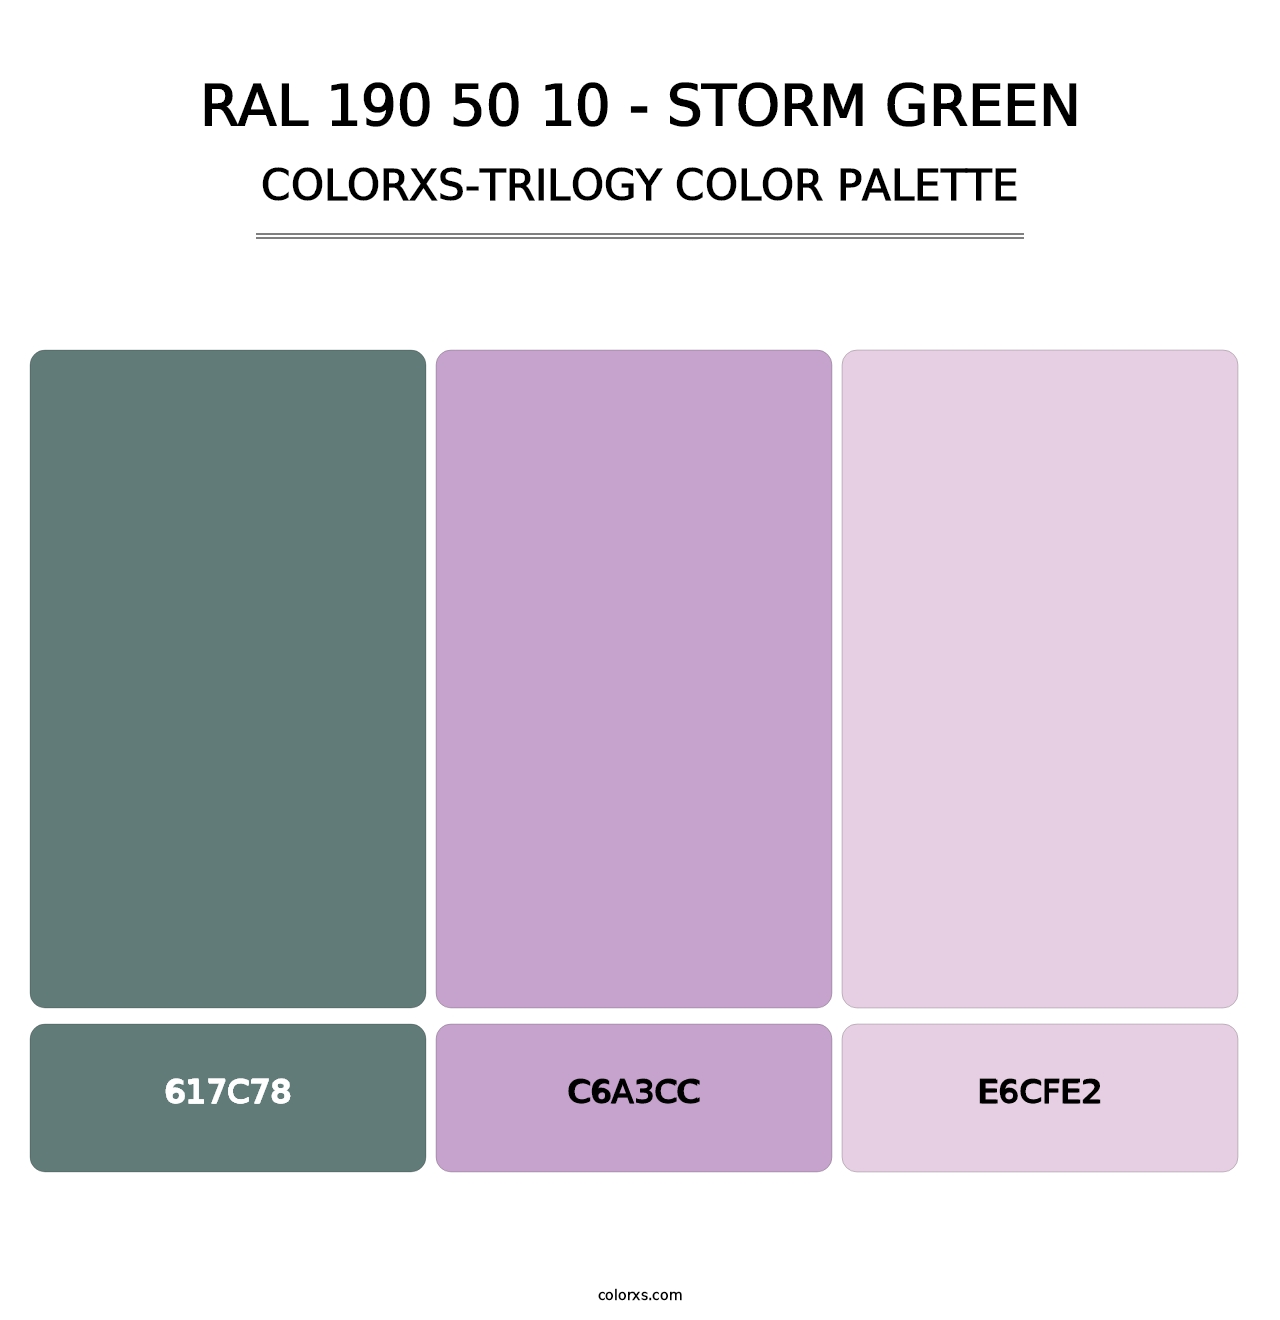 RAL 190 50 10 - Storm Green - Colorxs Trilogy Palette